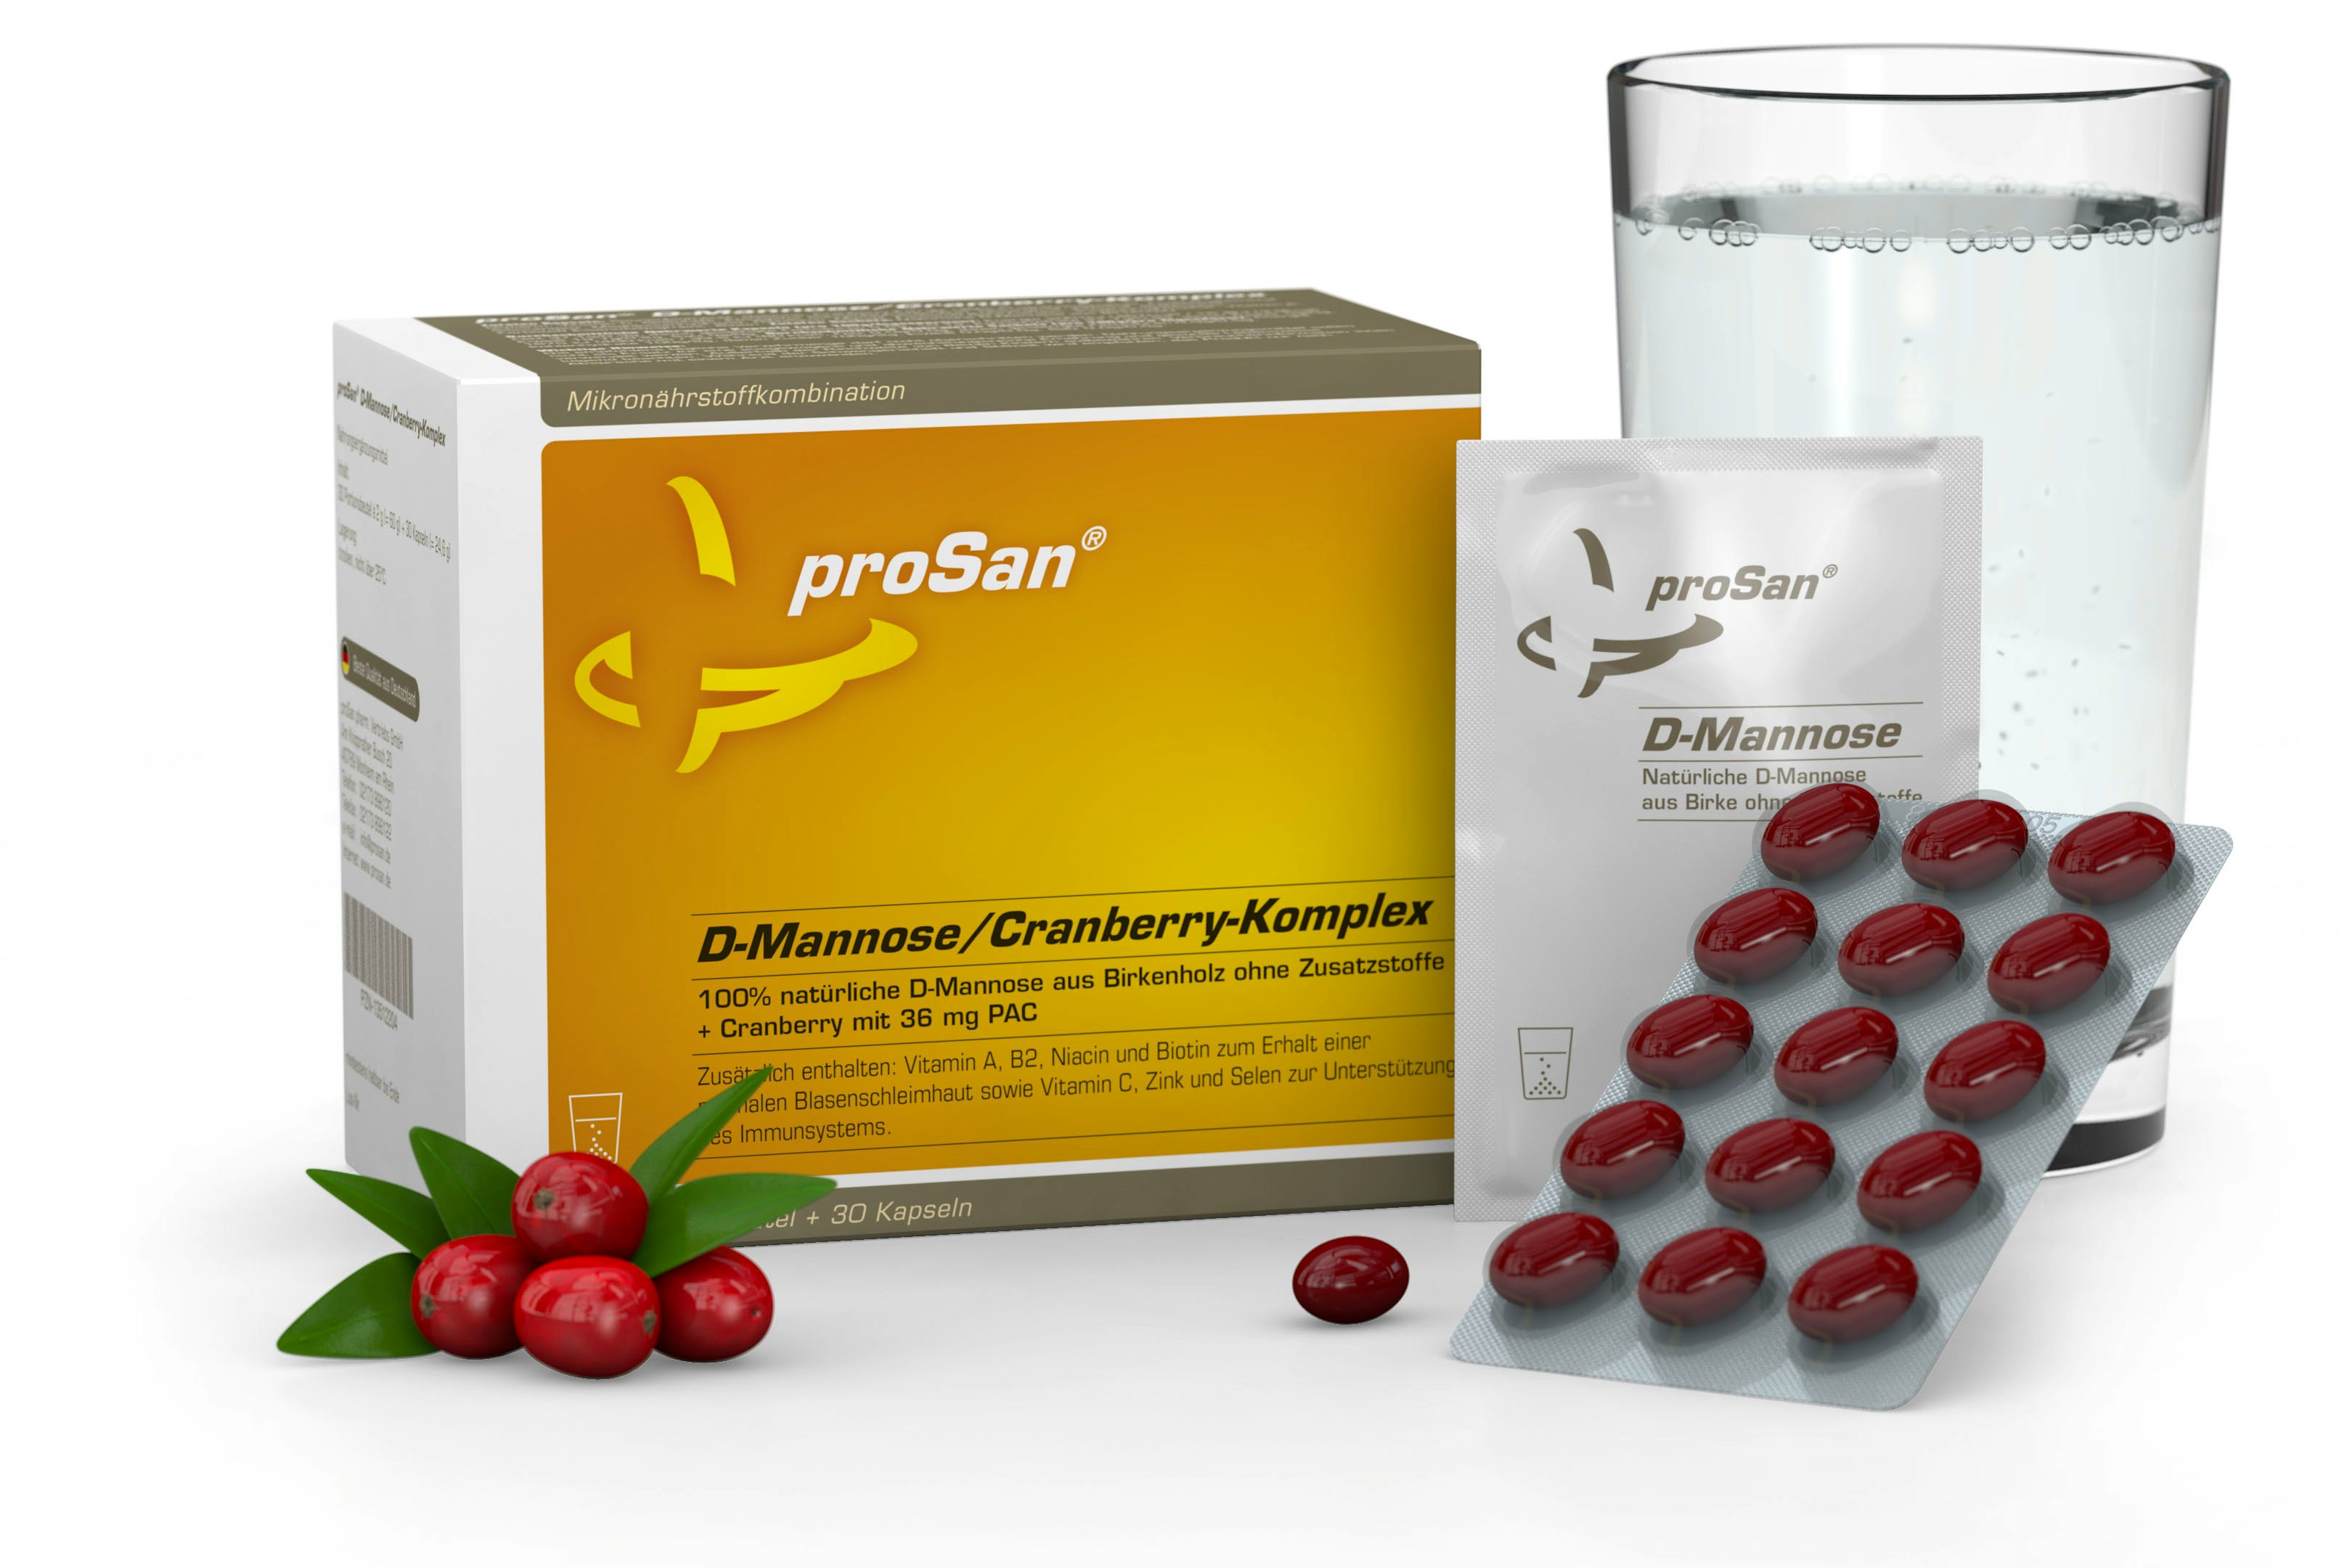 proSan D-Mannose/Cranberry-Komplex